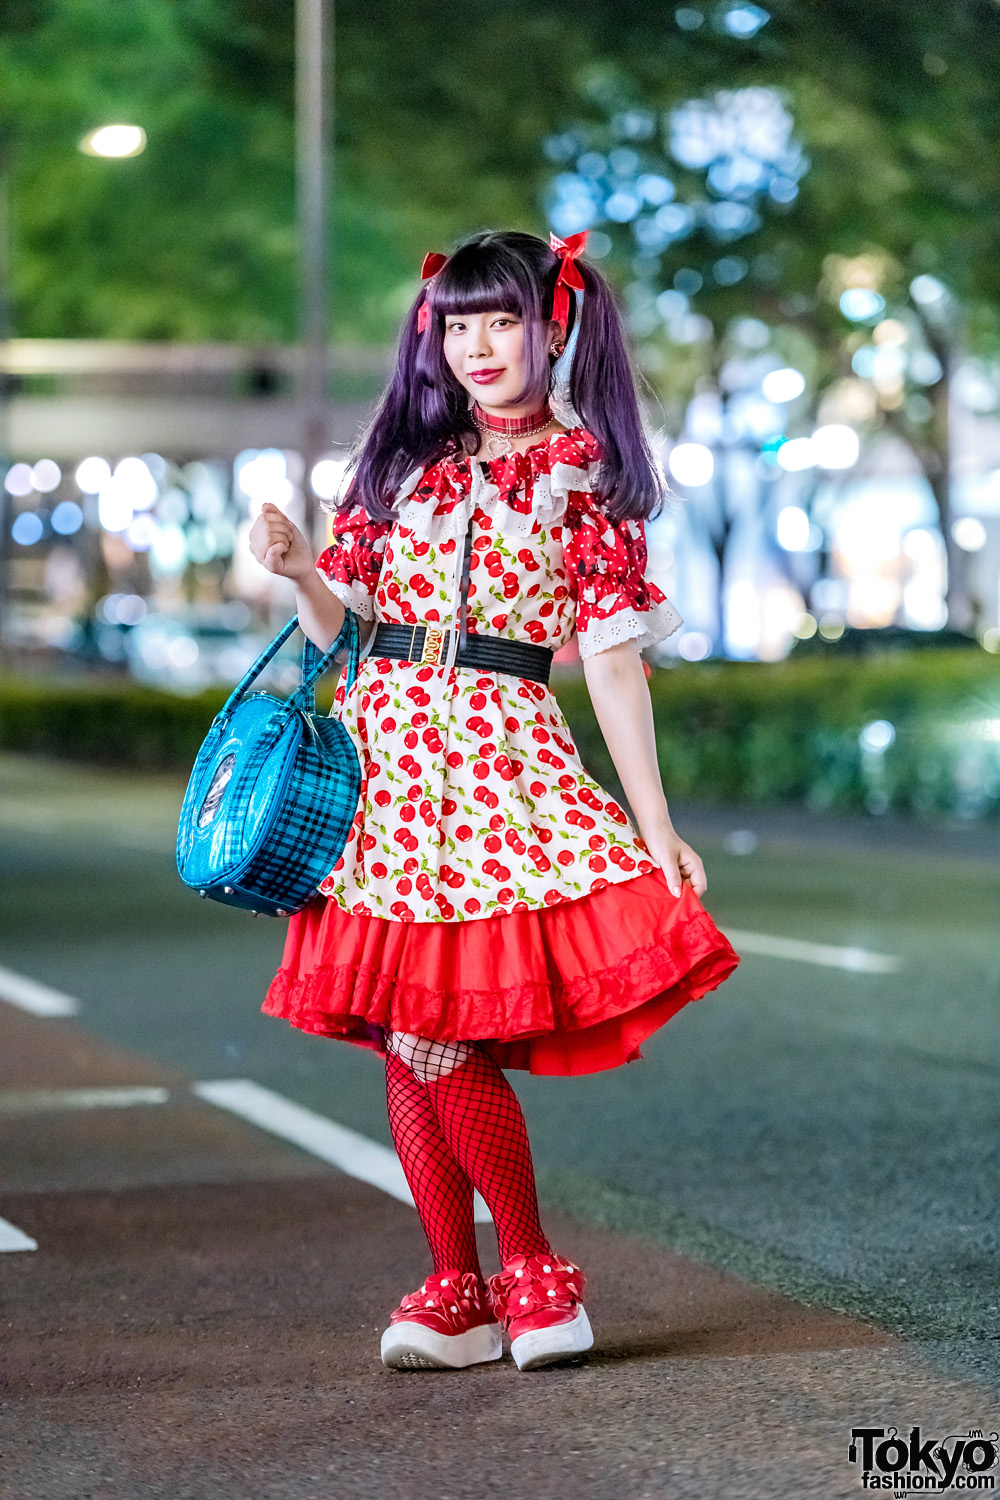 Harajuku Vintage Street Style w/ Polka-Dot Dress, Oh Pearl, Kinji